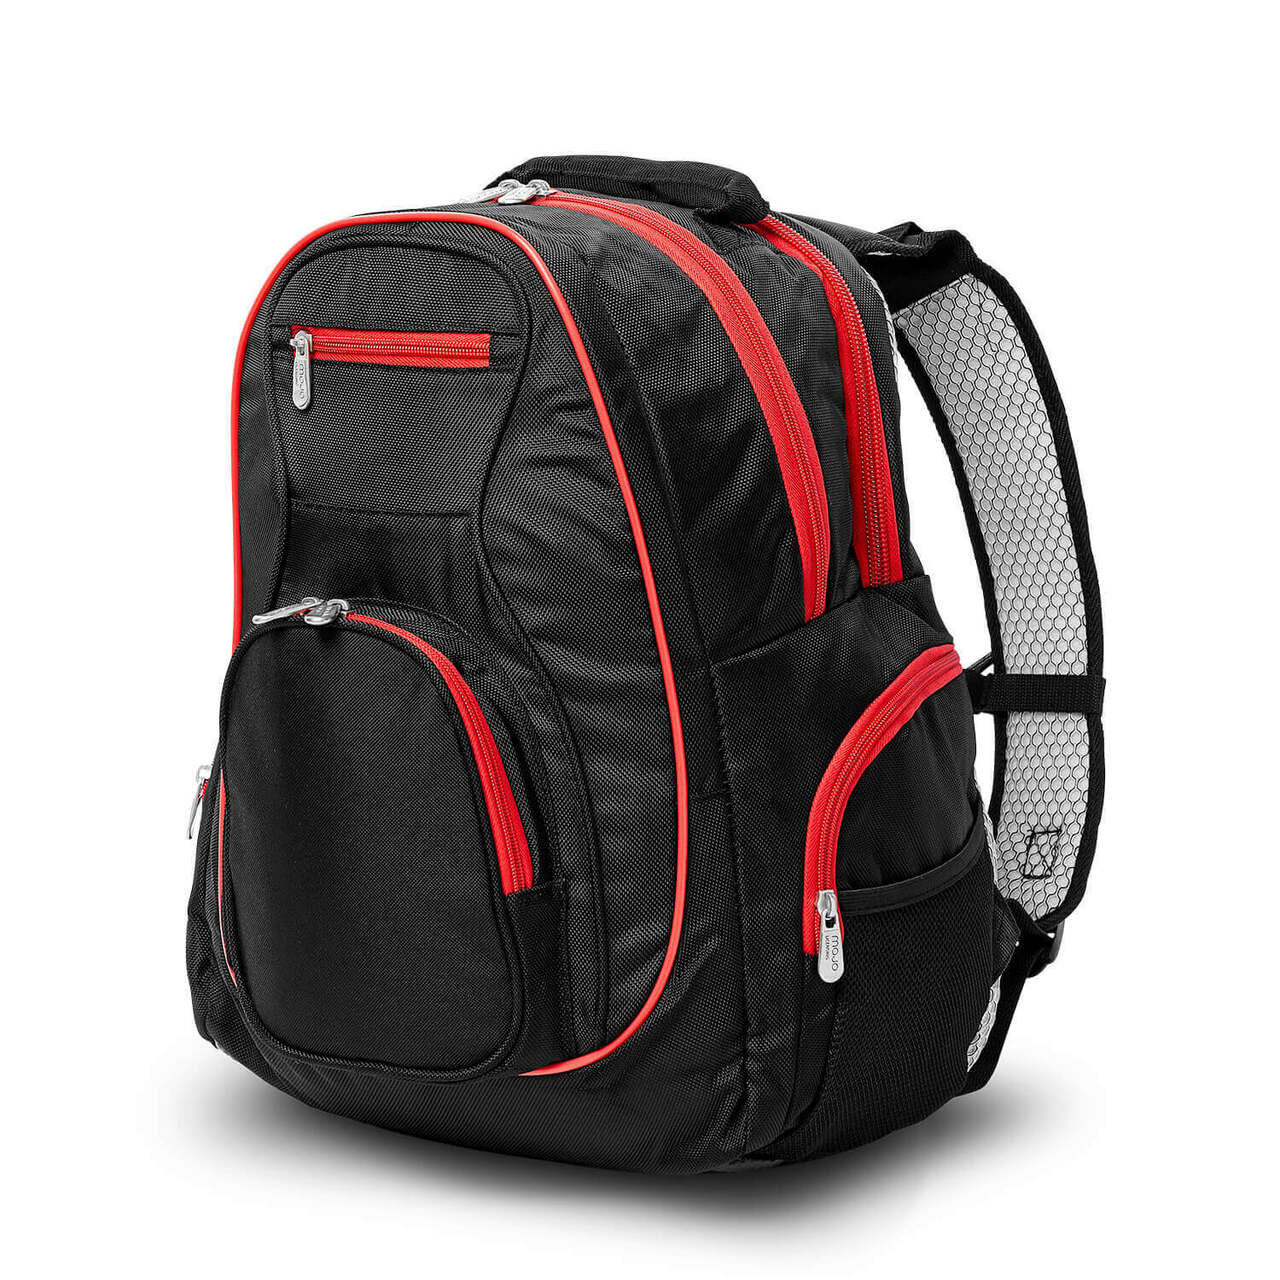 St. Louis Cardinals MOJO Premium Laptop Tote Bag and Luggage Set